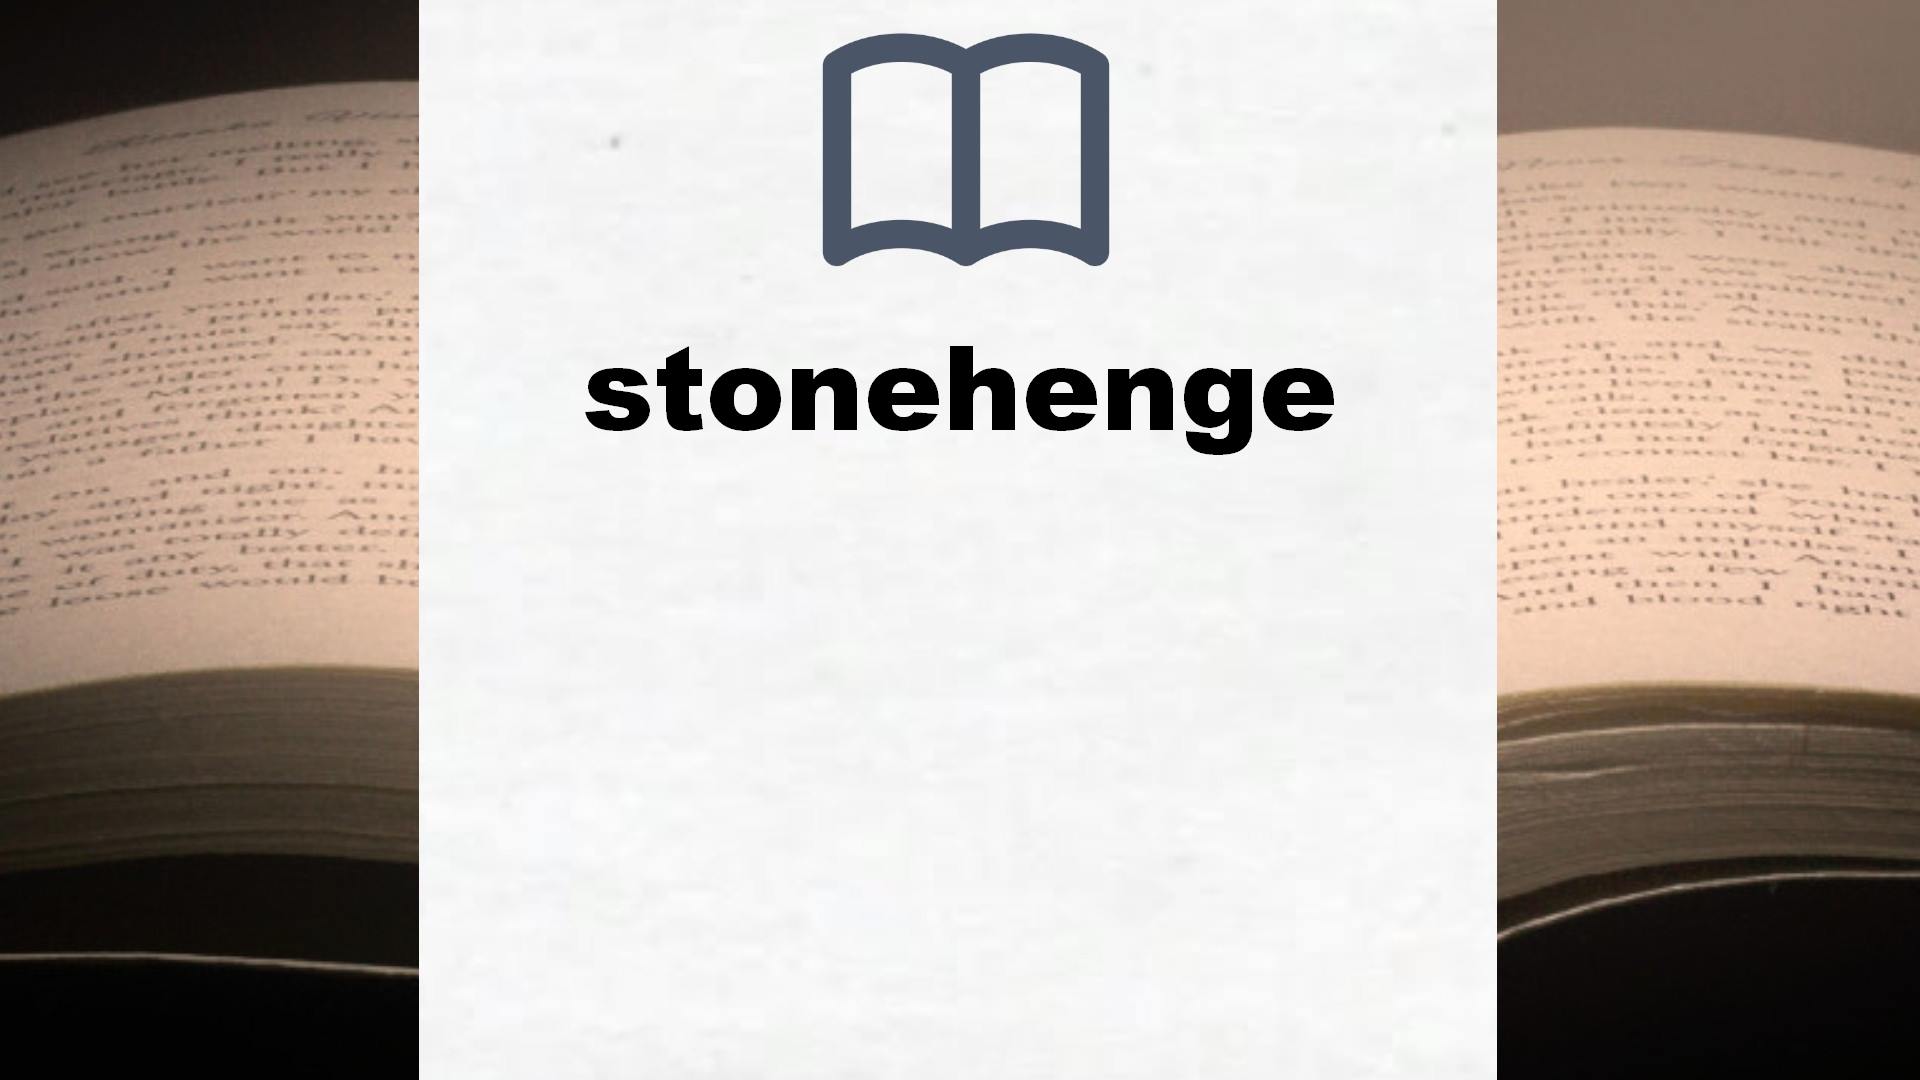 Libros sobre stonehenge